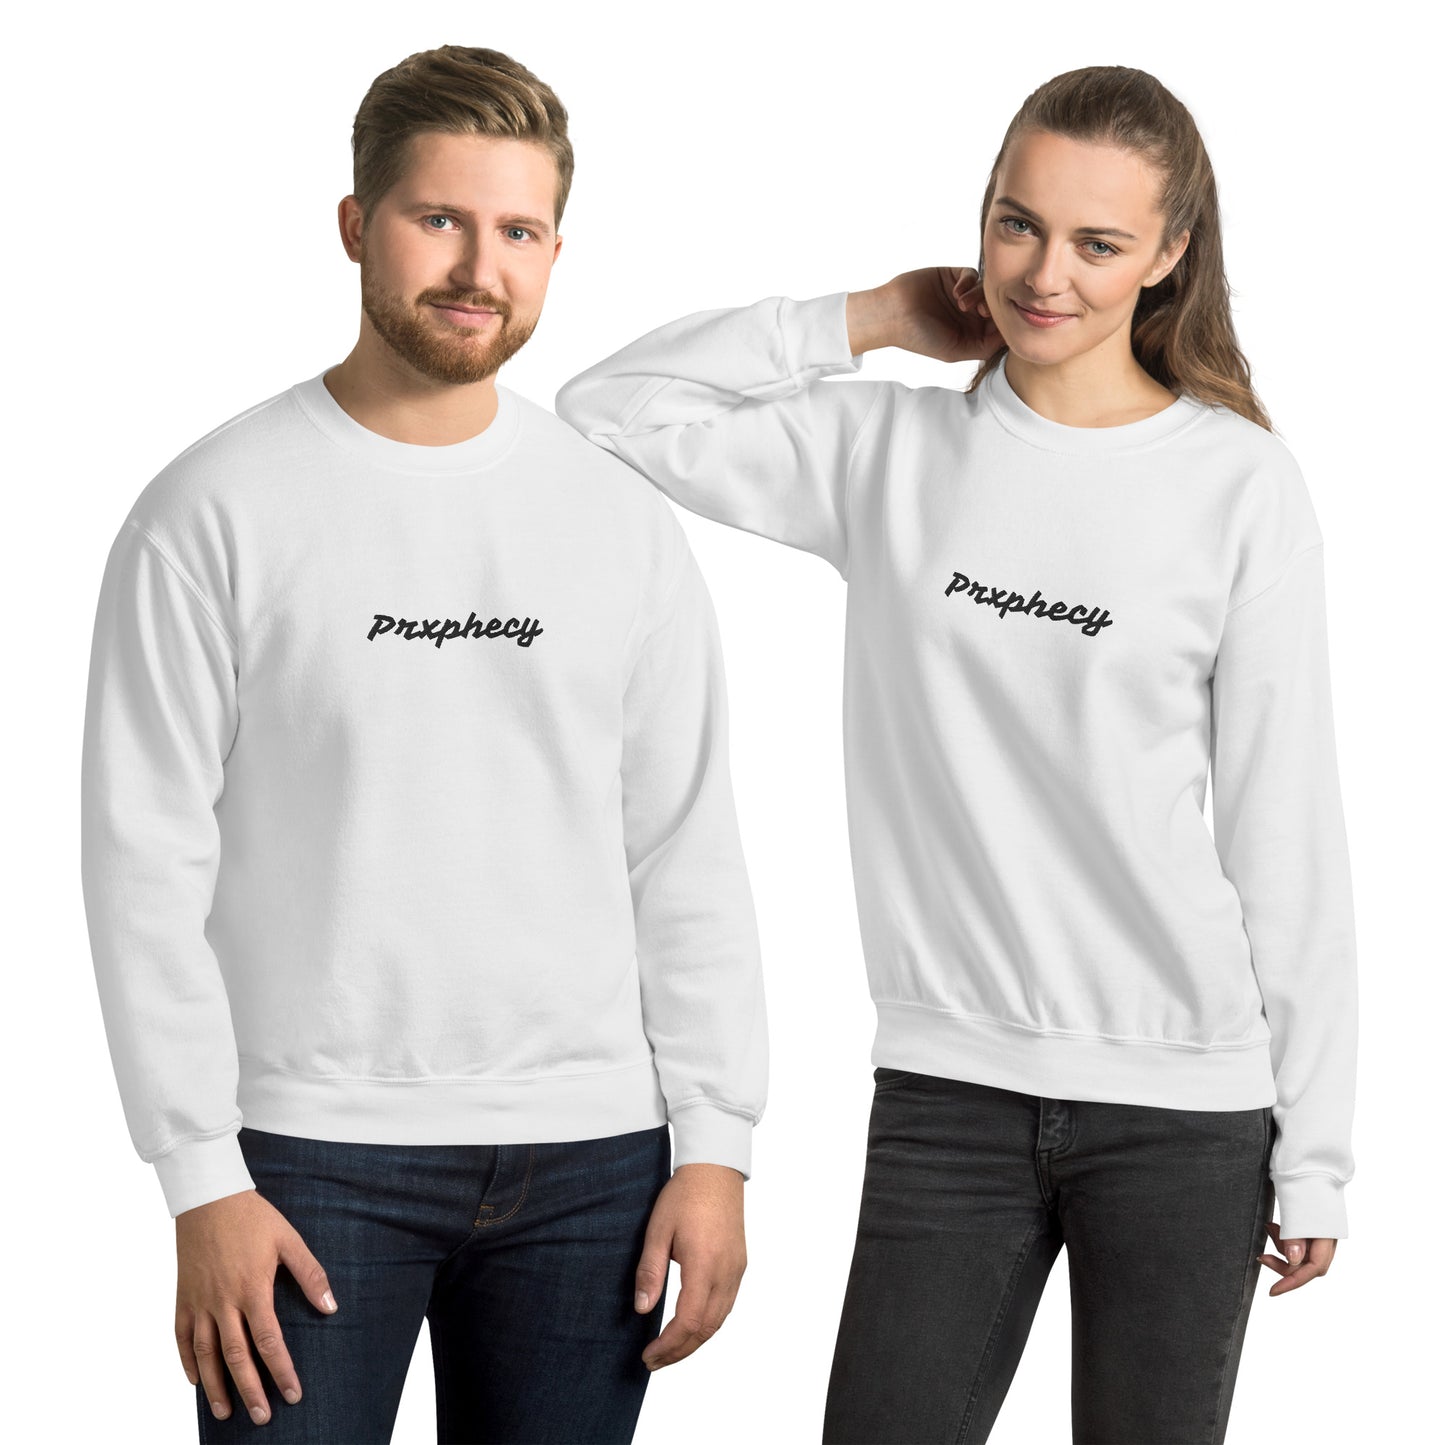 Prxphecy Black Embroidered Unisex Sweatshirt